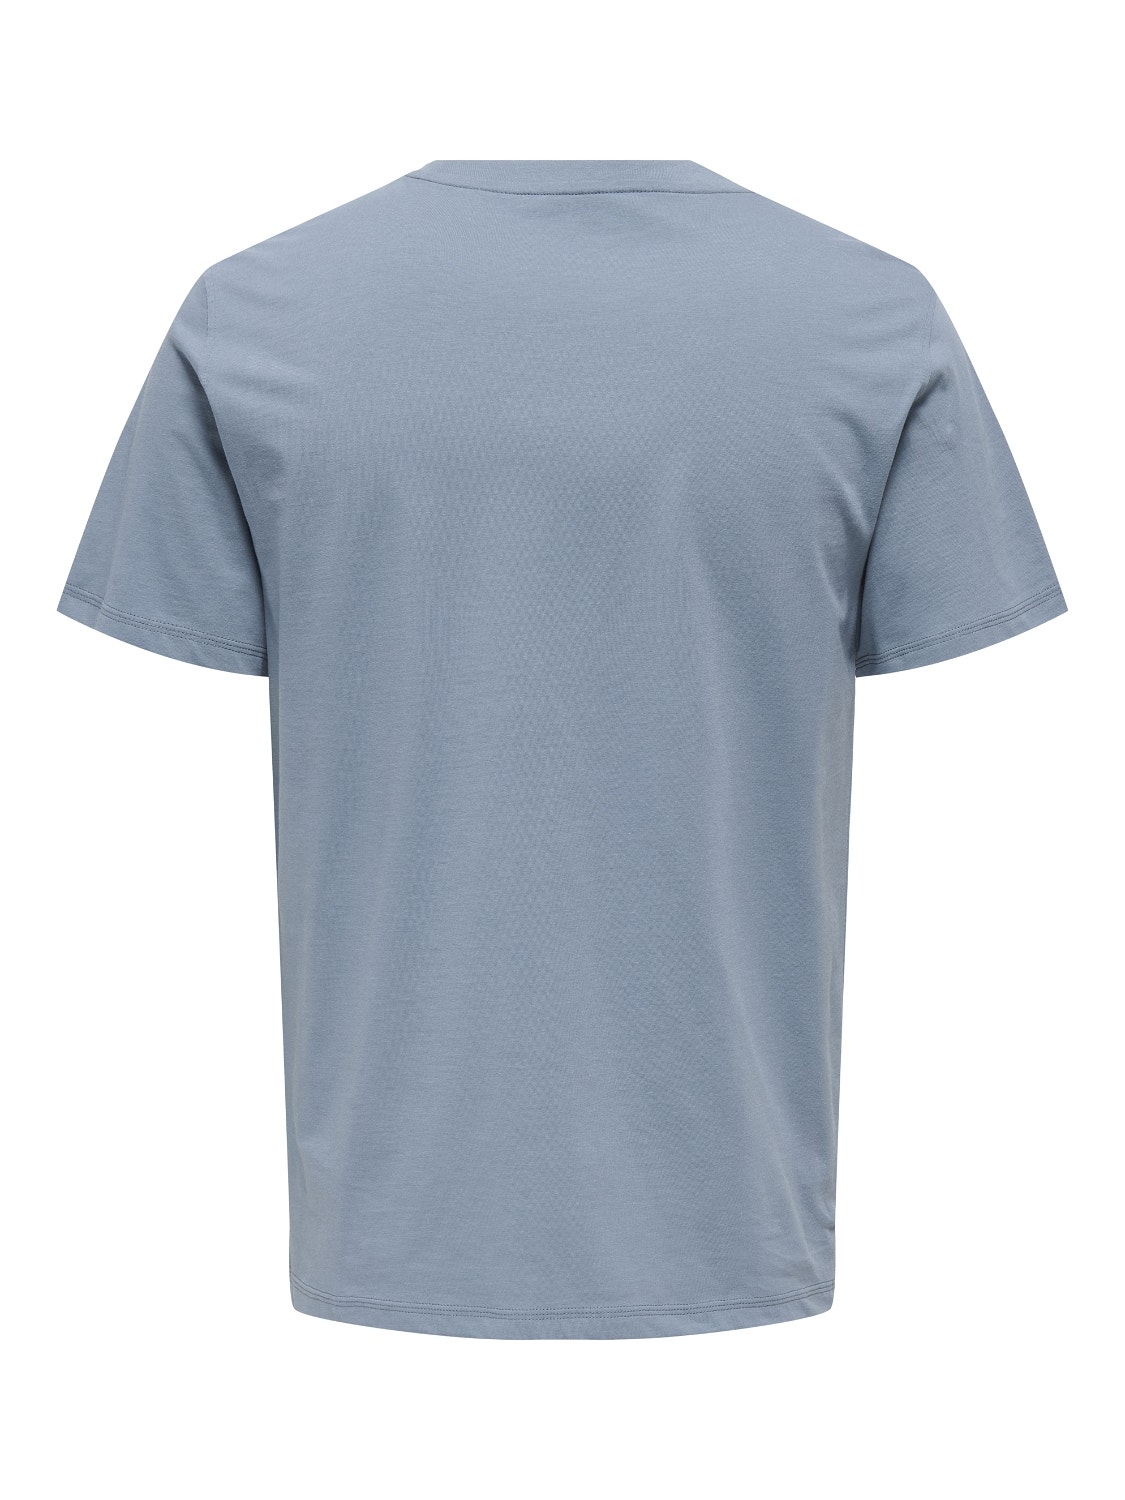 ONLY & SONS Camisetas Corte regular Cuello redondo -Flint Stone - 22025208